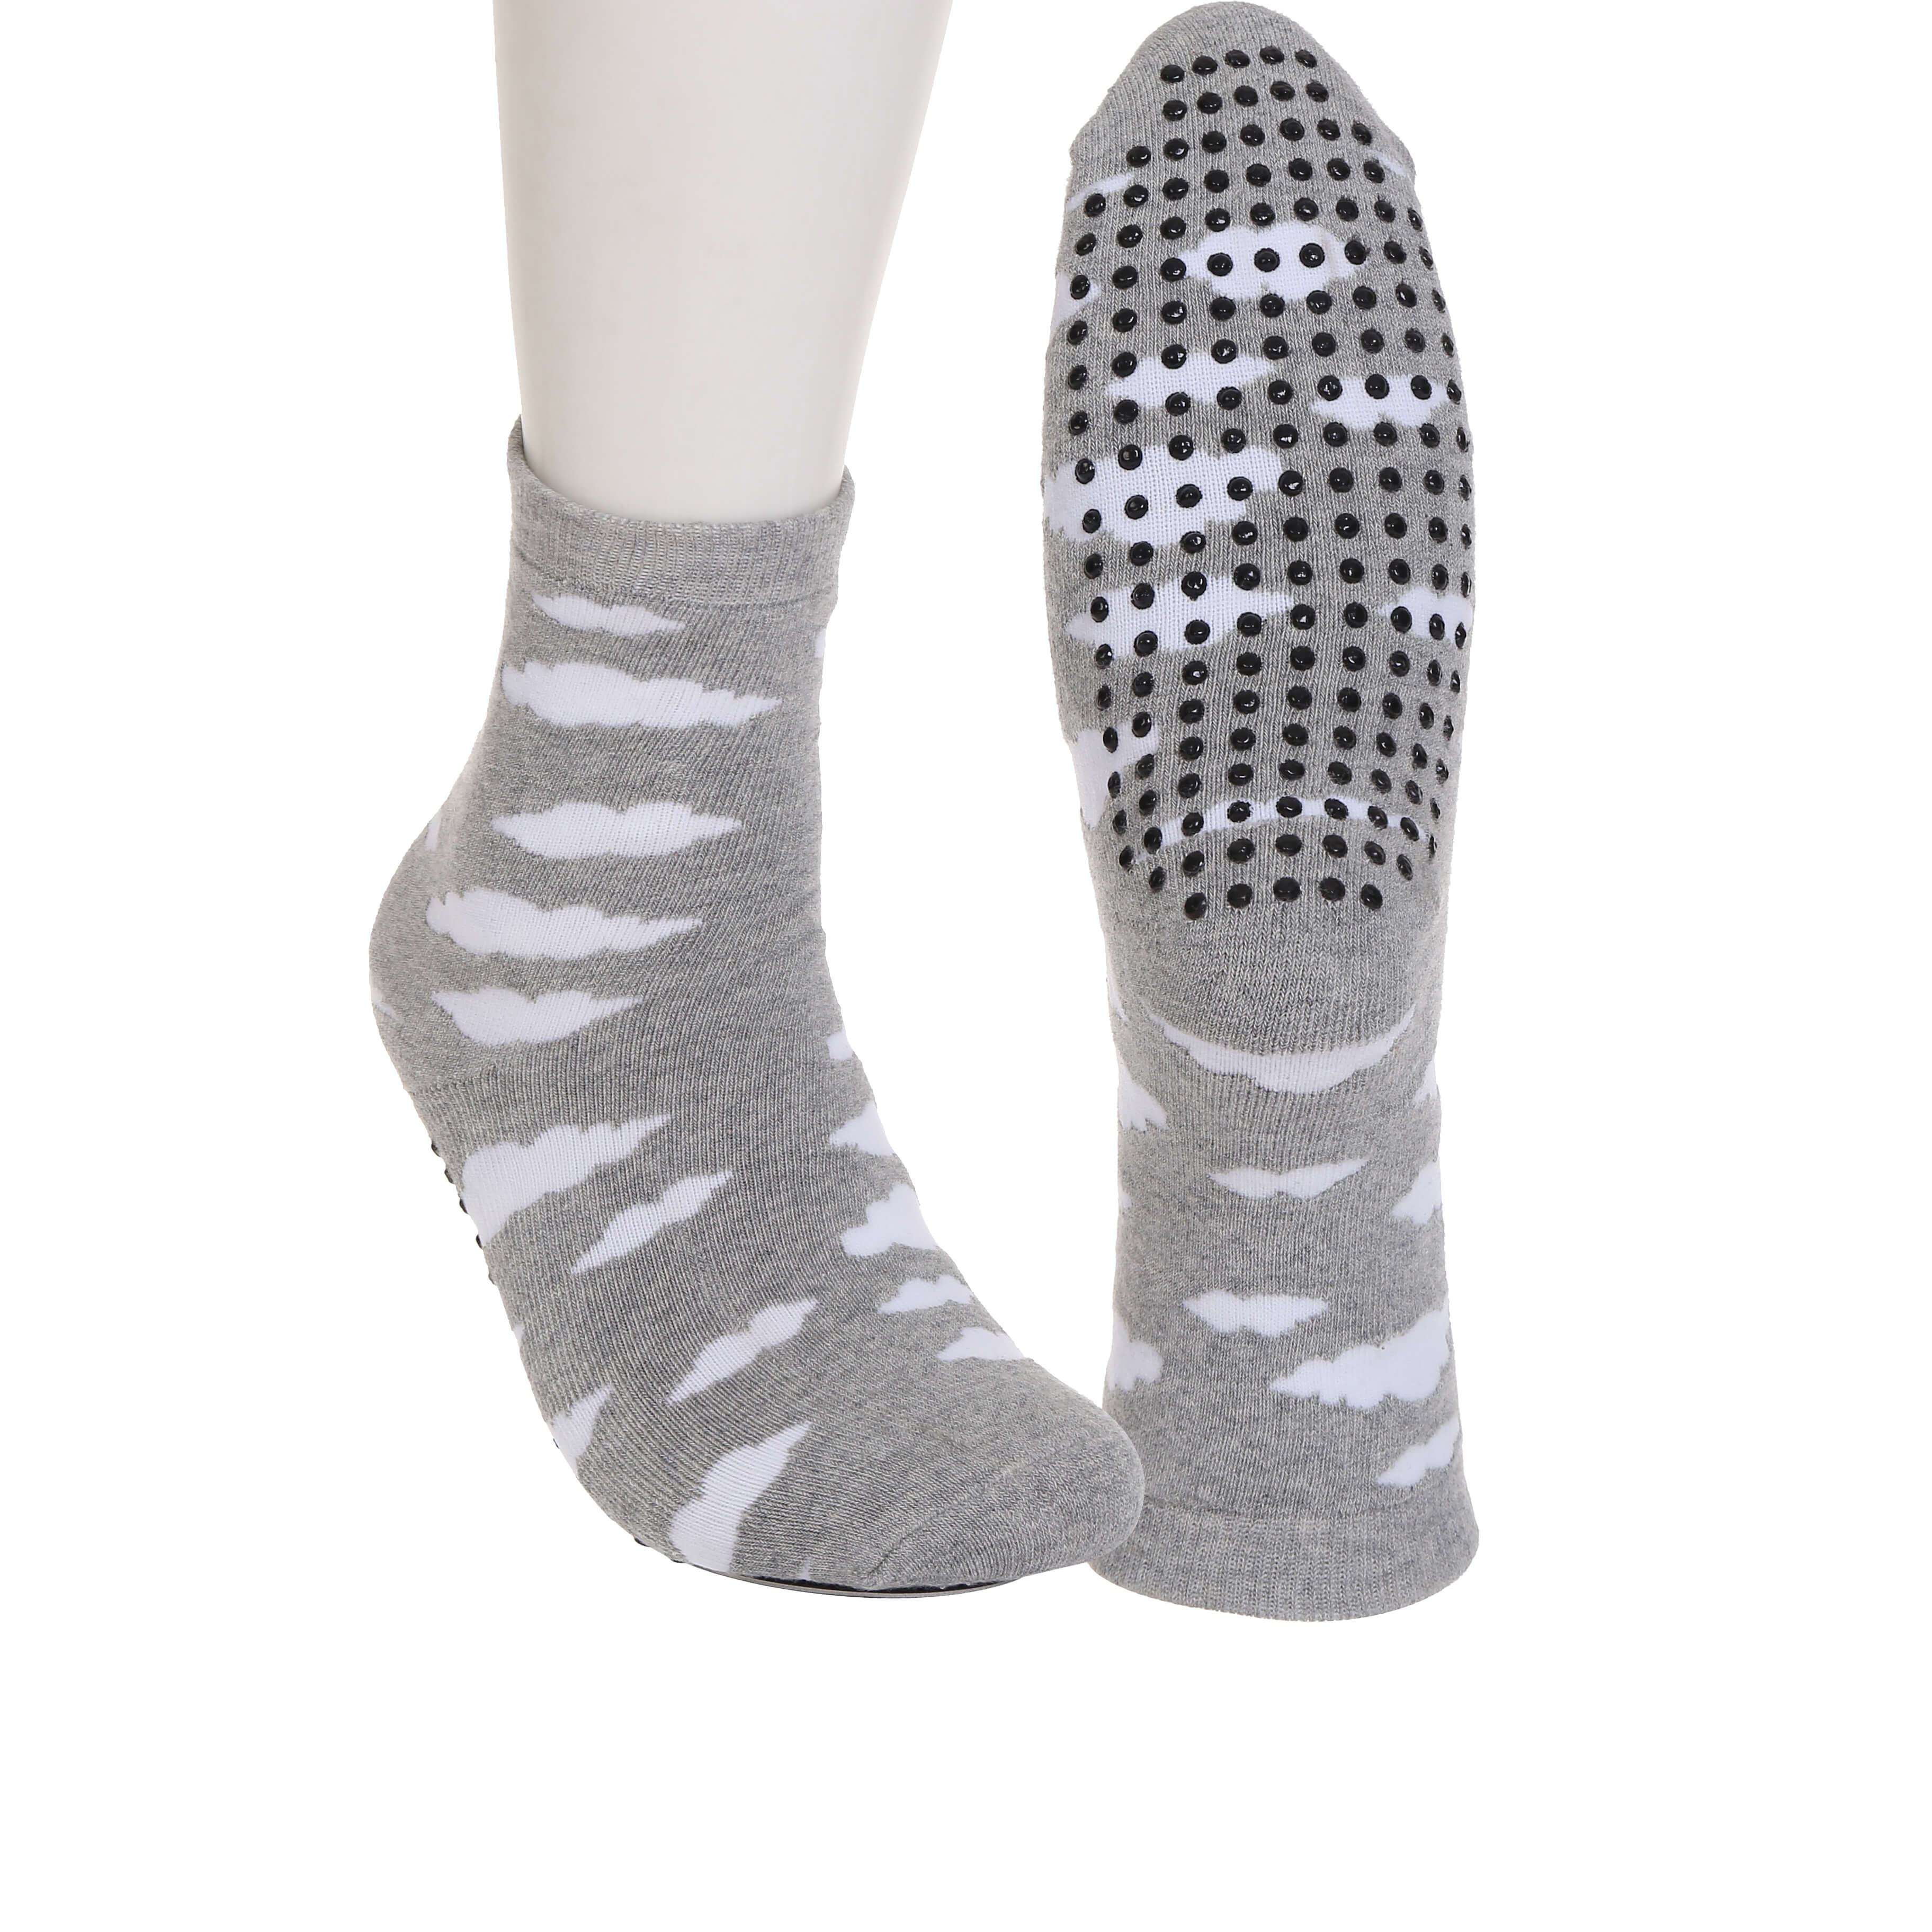 Bespoke Non Slip Socks Yoga Socks Cloud Print Design Trampoline Socks